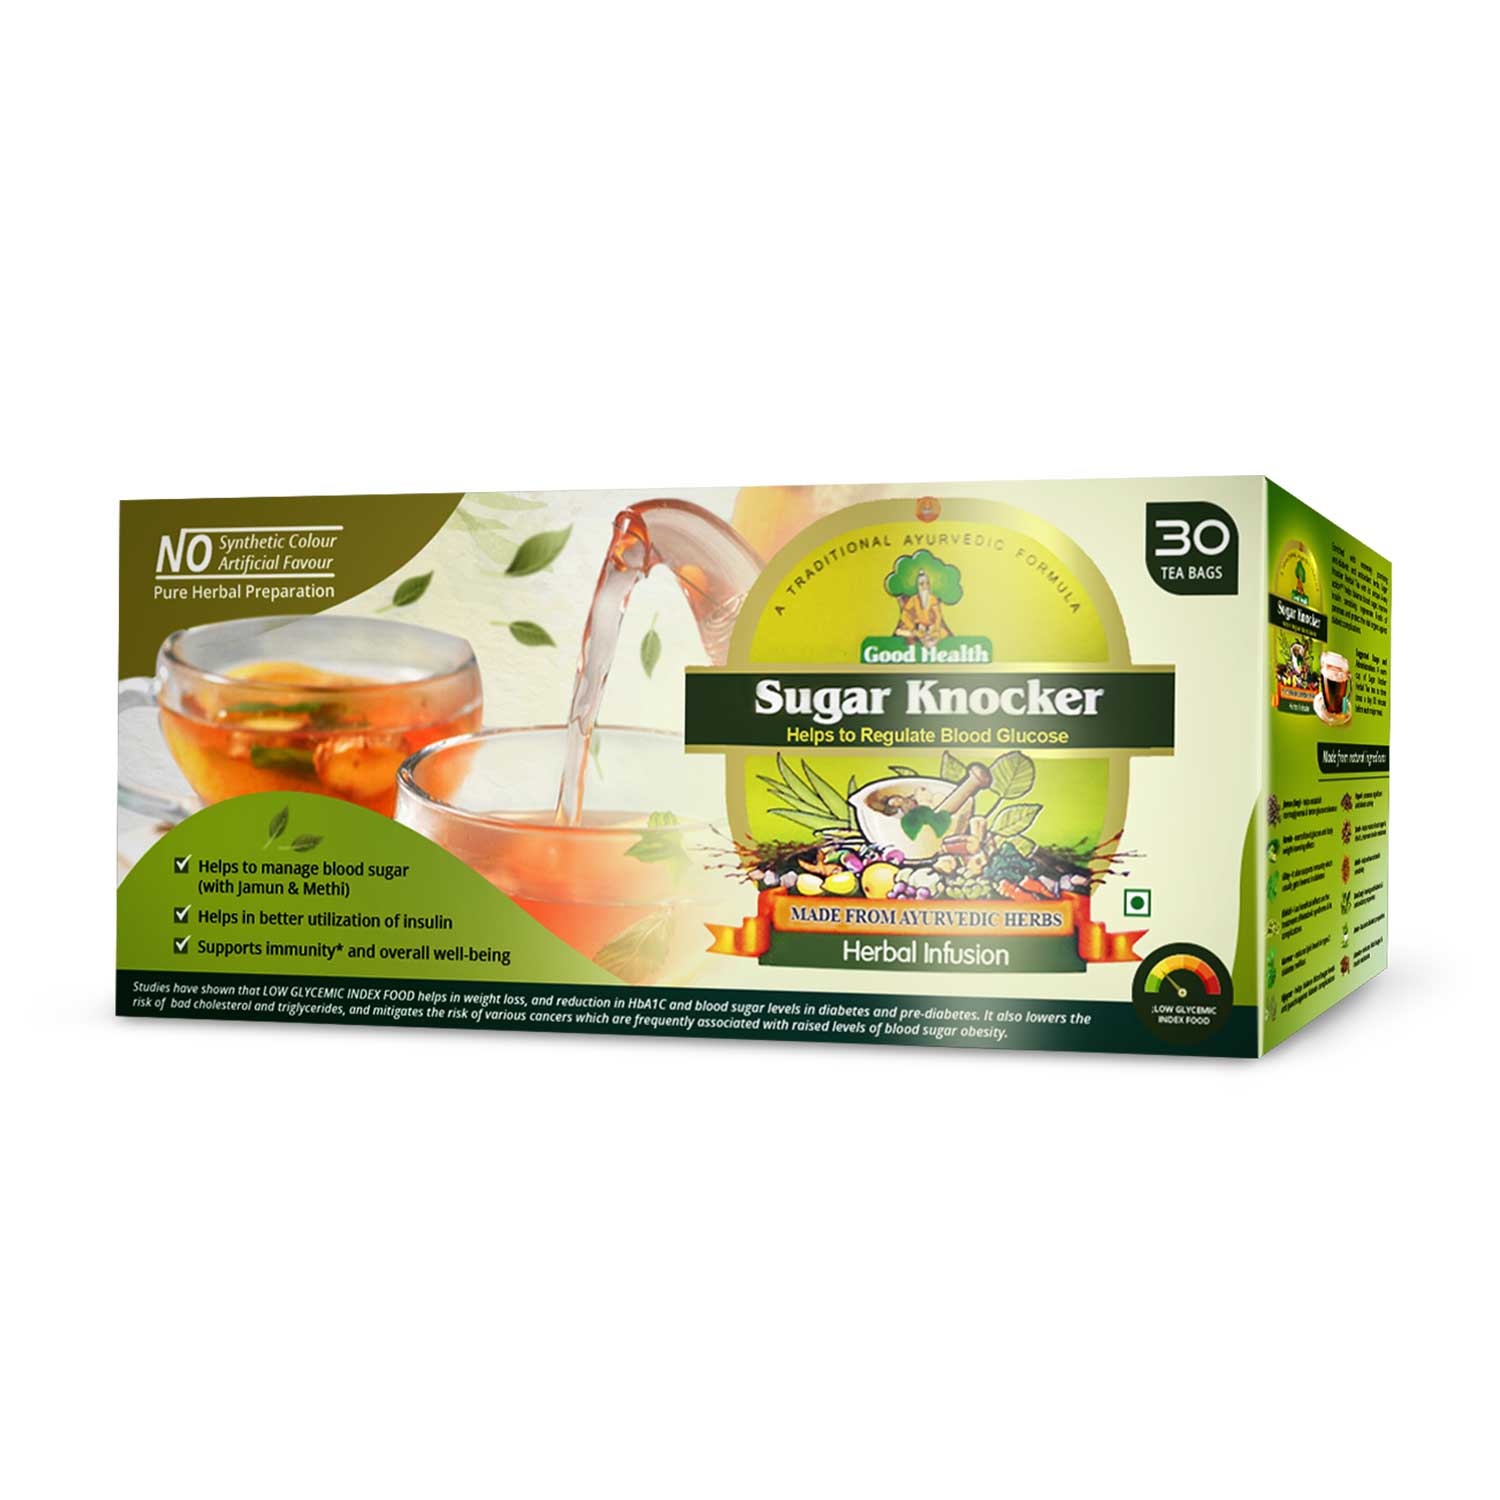 Sugar Knocker Buy 2+ Get 1 FREE with Sugar Knocker Herbal Tea (30 Tea Bags)